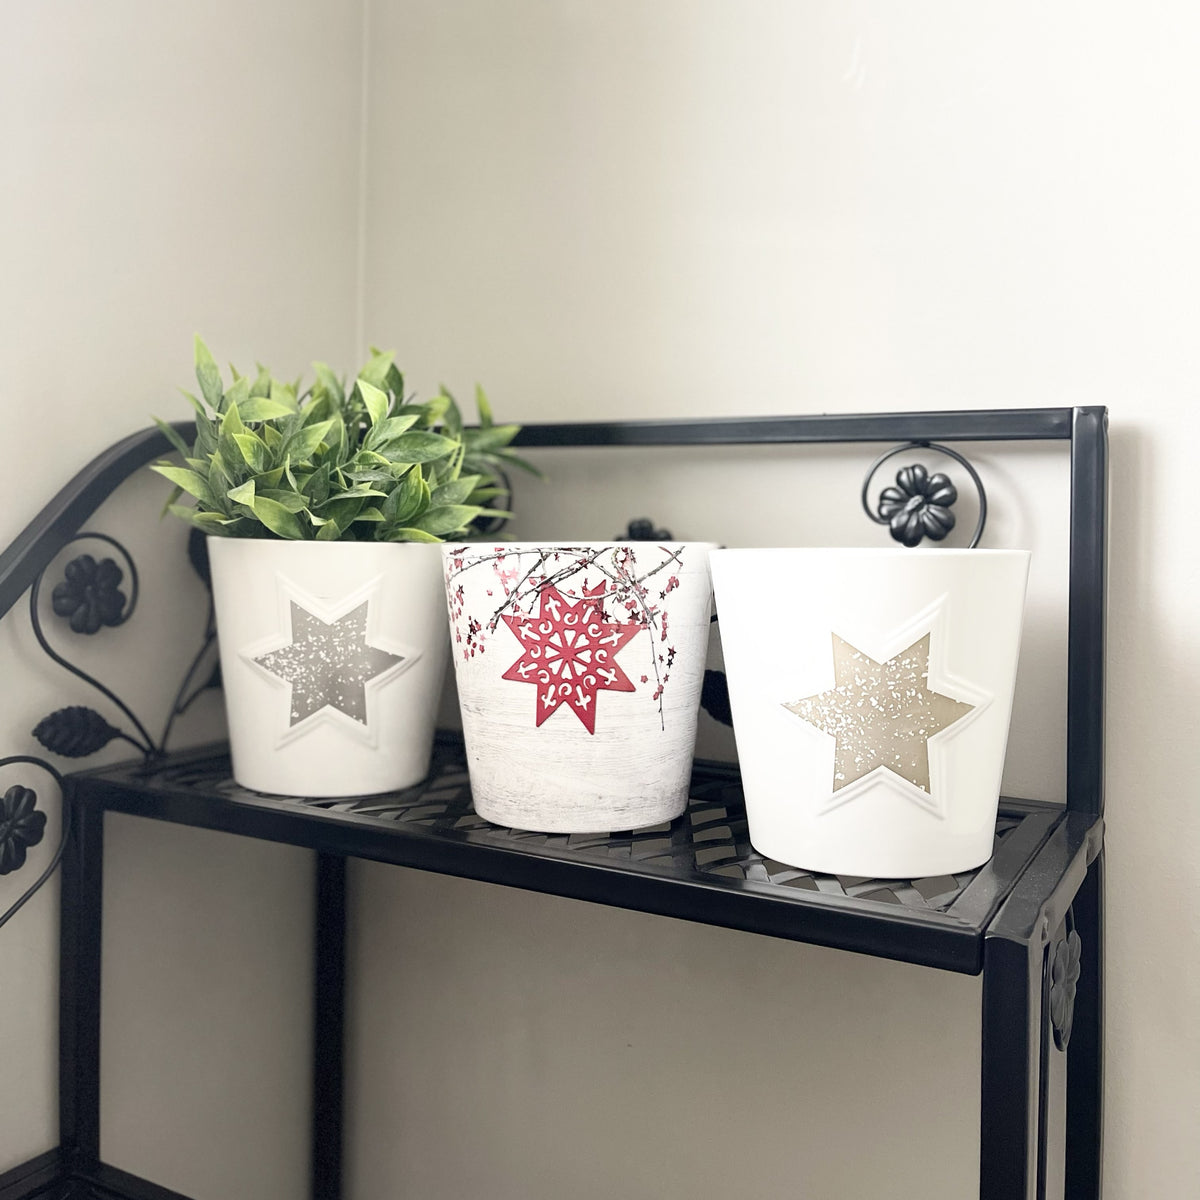 Stars 3-Piece Holiday Indoor Ceramic Pottery Set